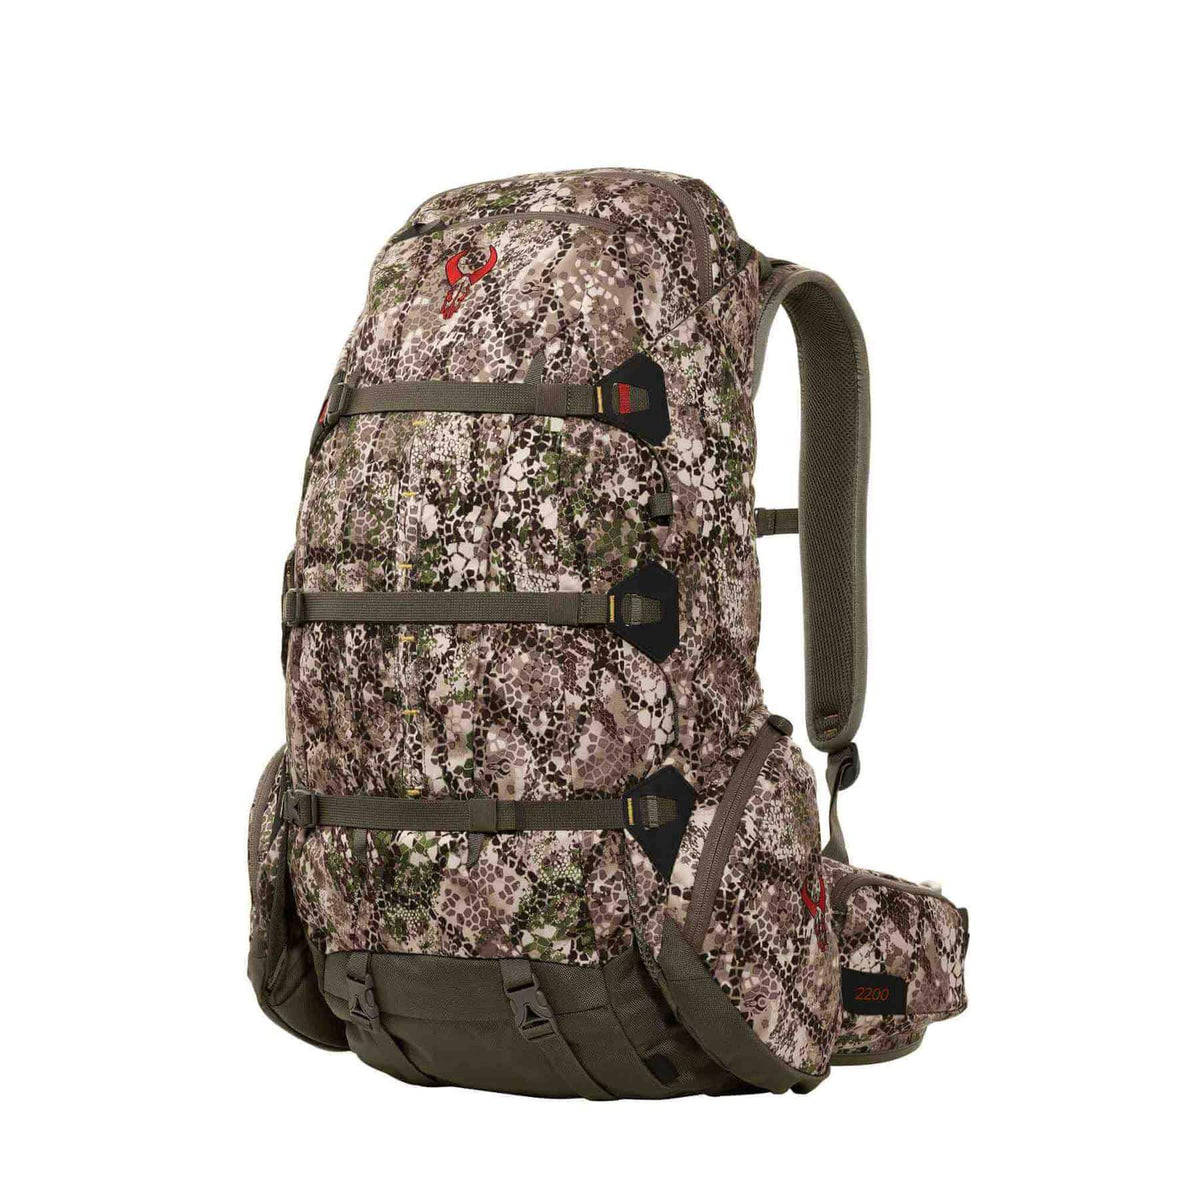 Badlands Packs 2200 Hunting Backpack 2020 Model Approach Camo